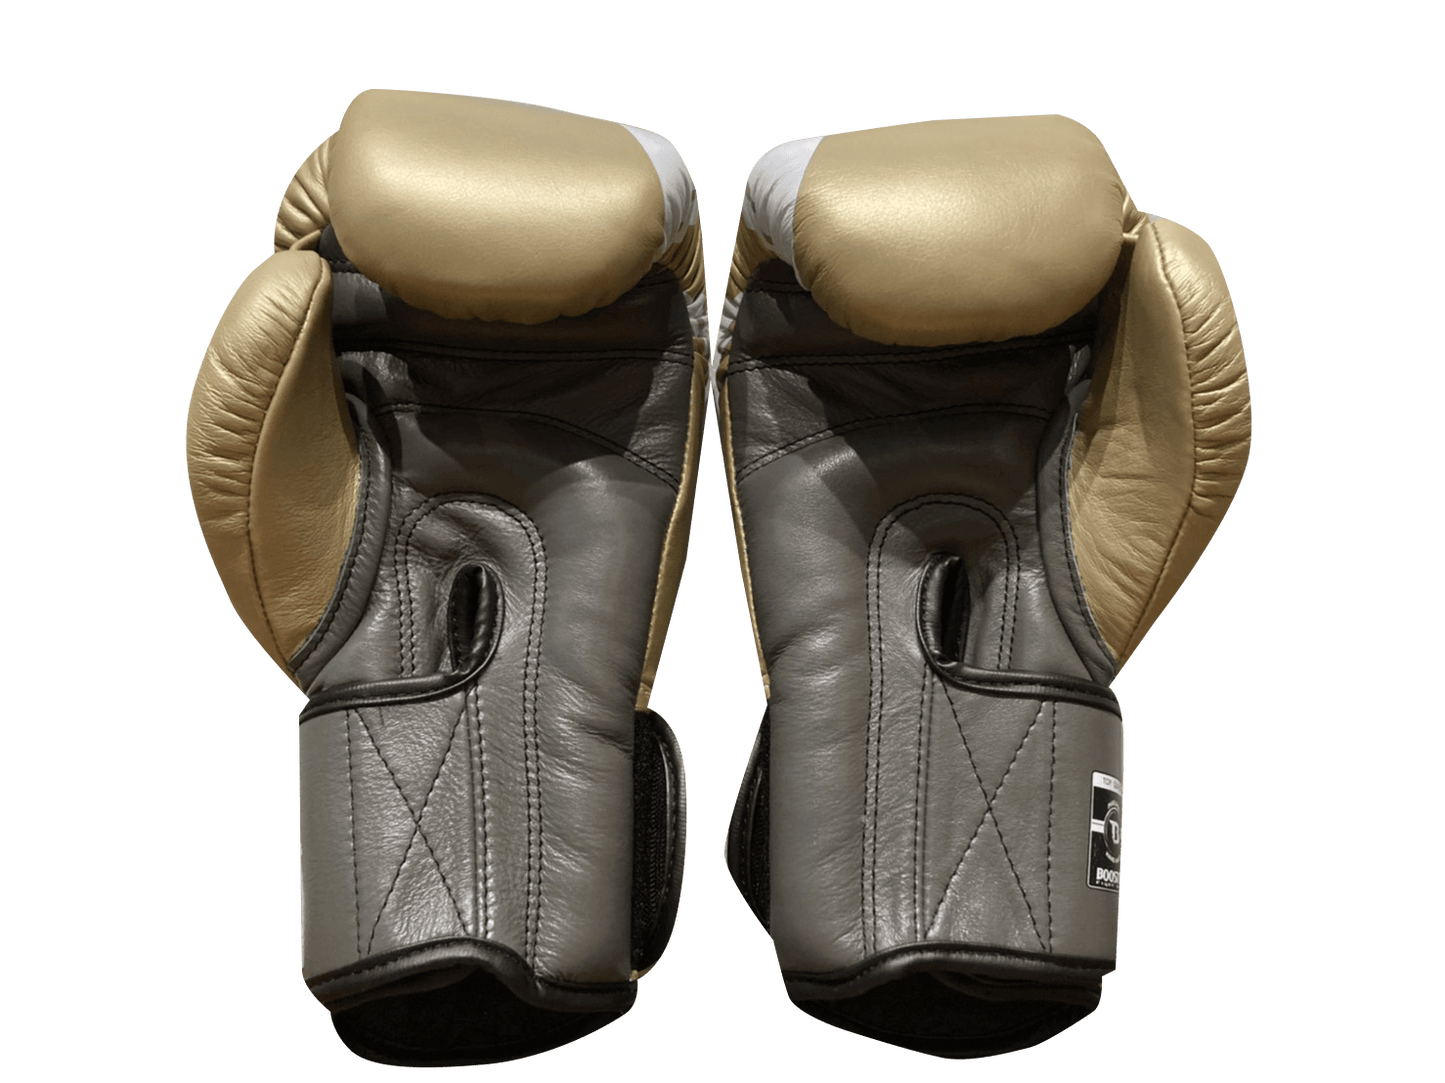 Booster Boxing Gloves BGLV3 Gold White Grey - SUPER EXPORT SHOP